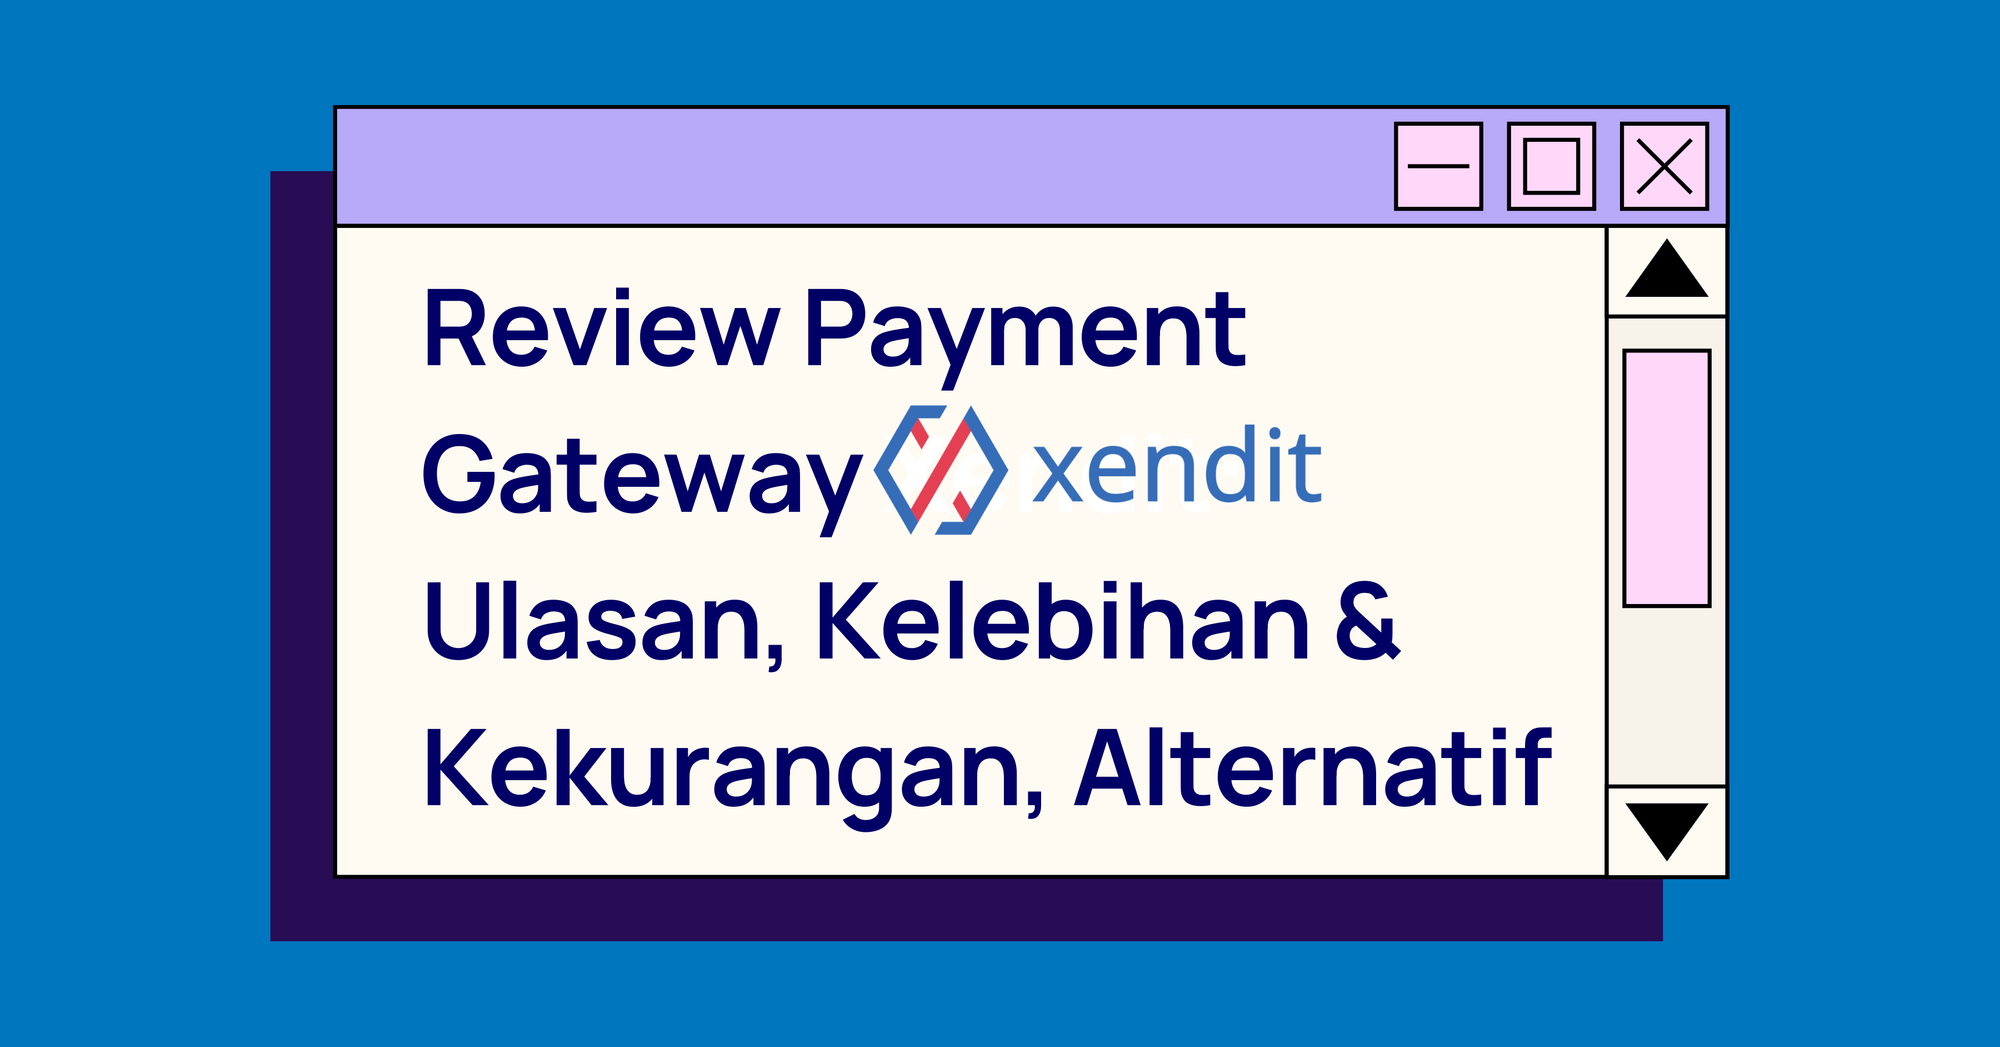 Review Payment Gateway Xendit: Ulasan, Kelebihan & Kekurangan, Alternatif